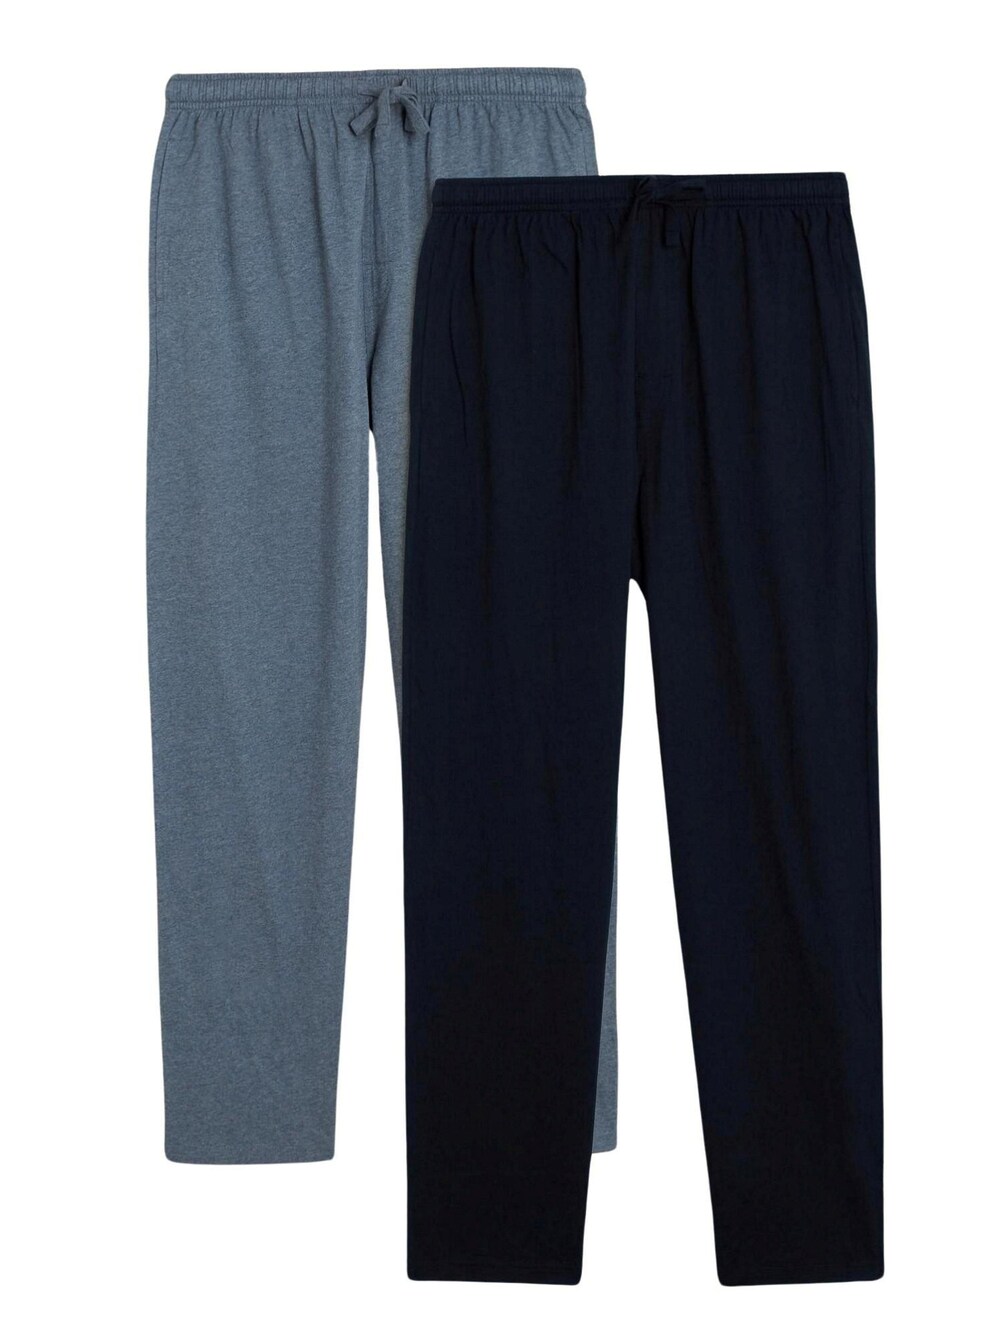 Пижамные штаны Marks & Spencer, голубовато-черный